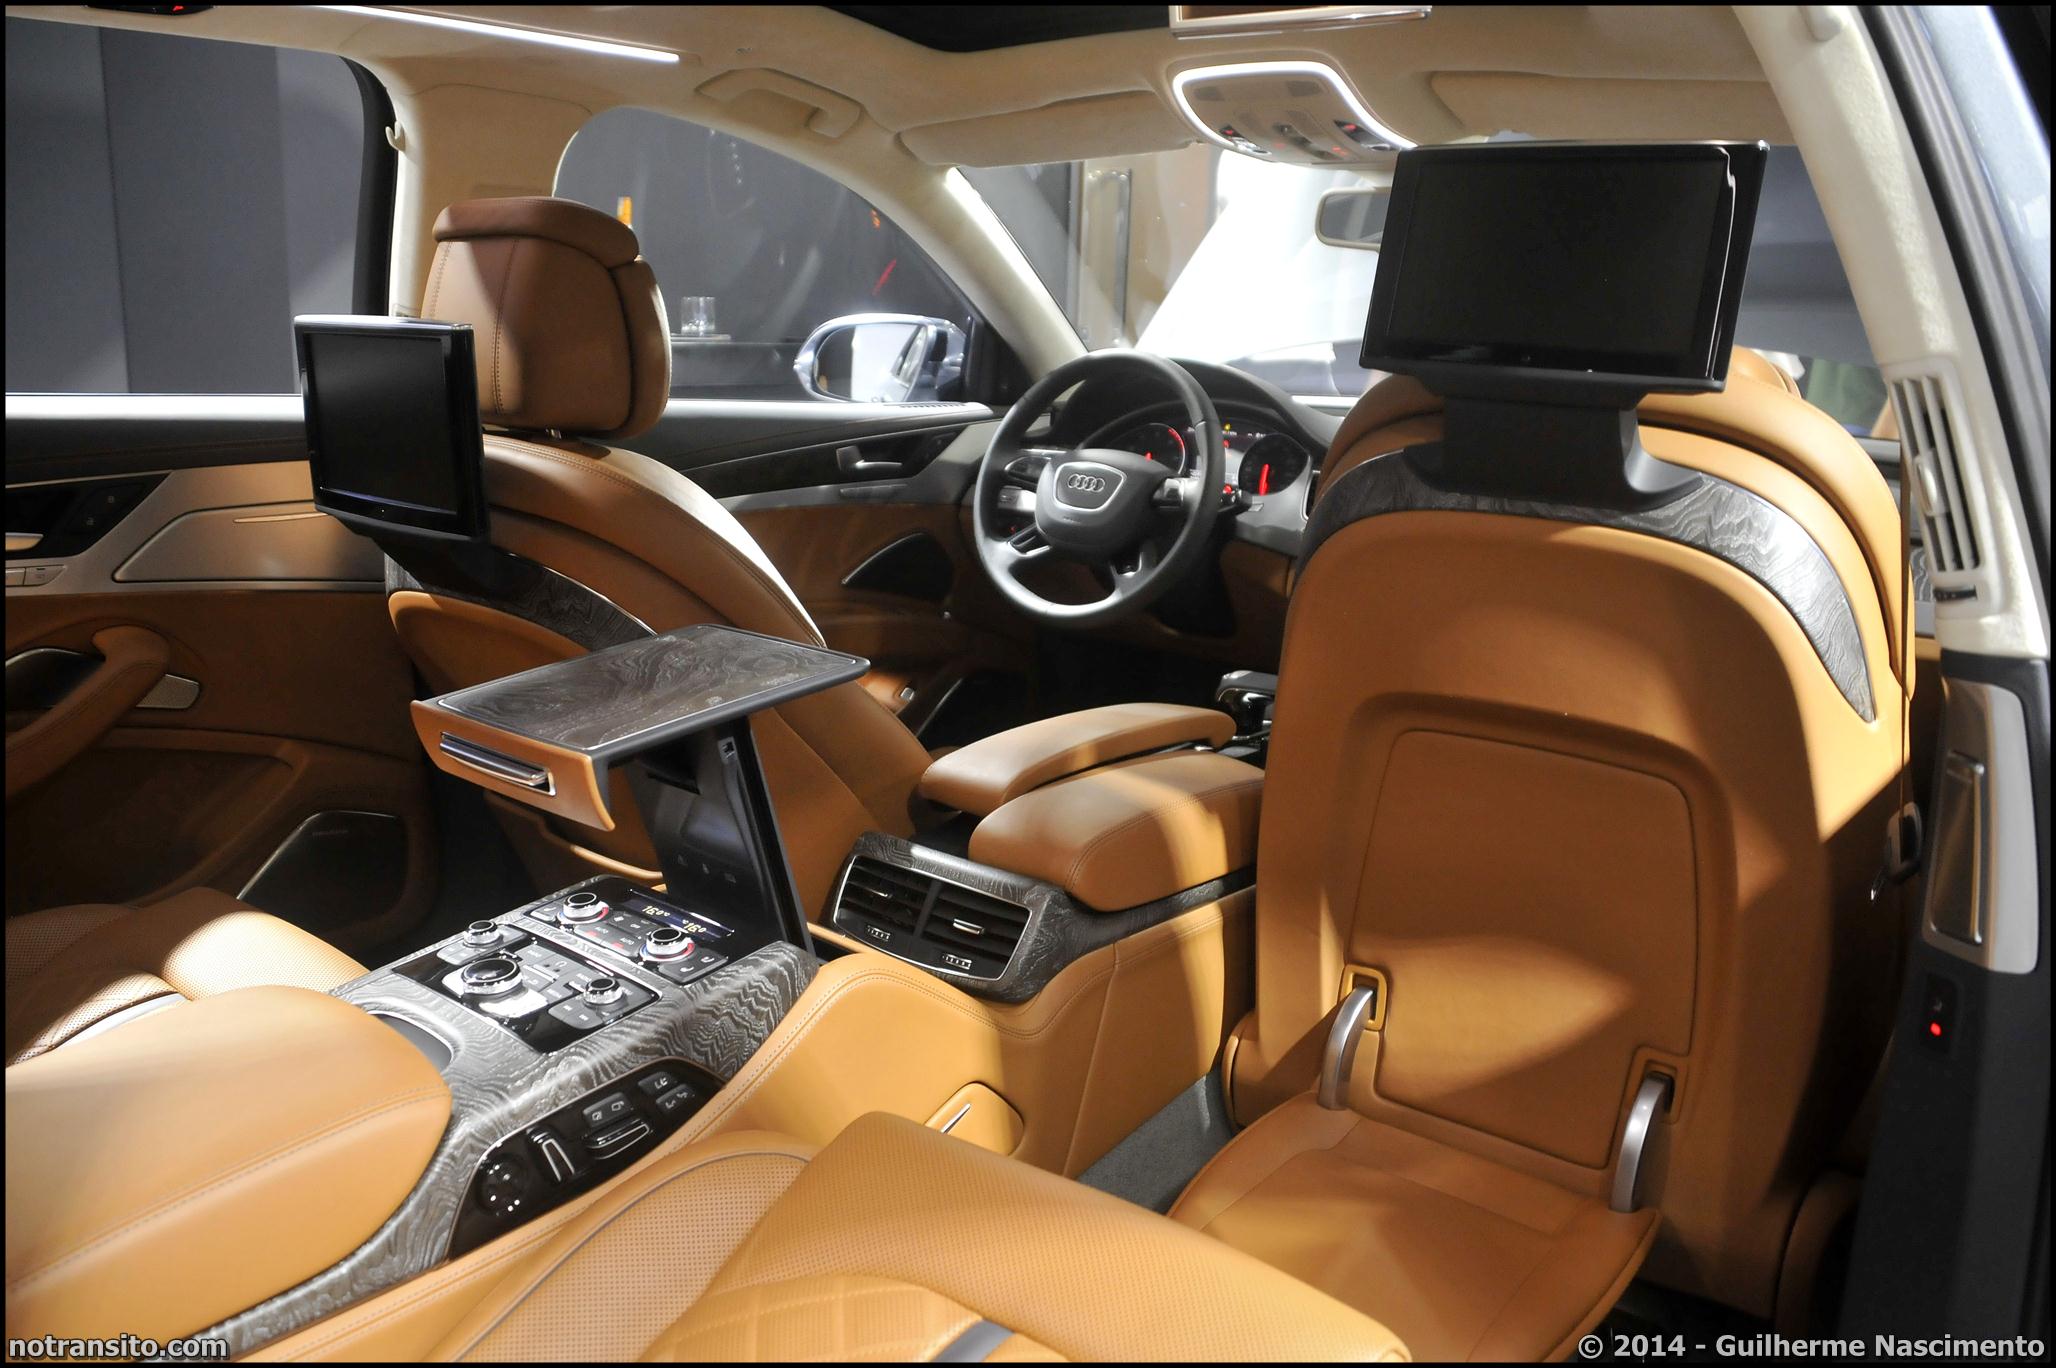 Audi A8 L W12 Exclusive Concept, Salão do Automóvel 2014, Agatha Cognac, Poltrona Frau